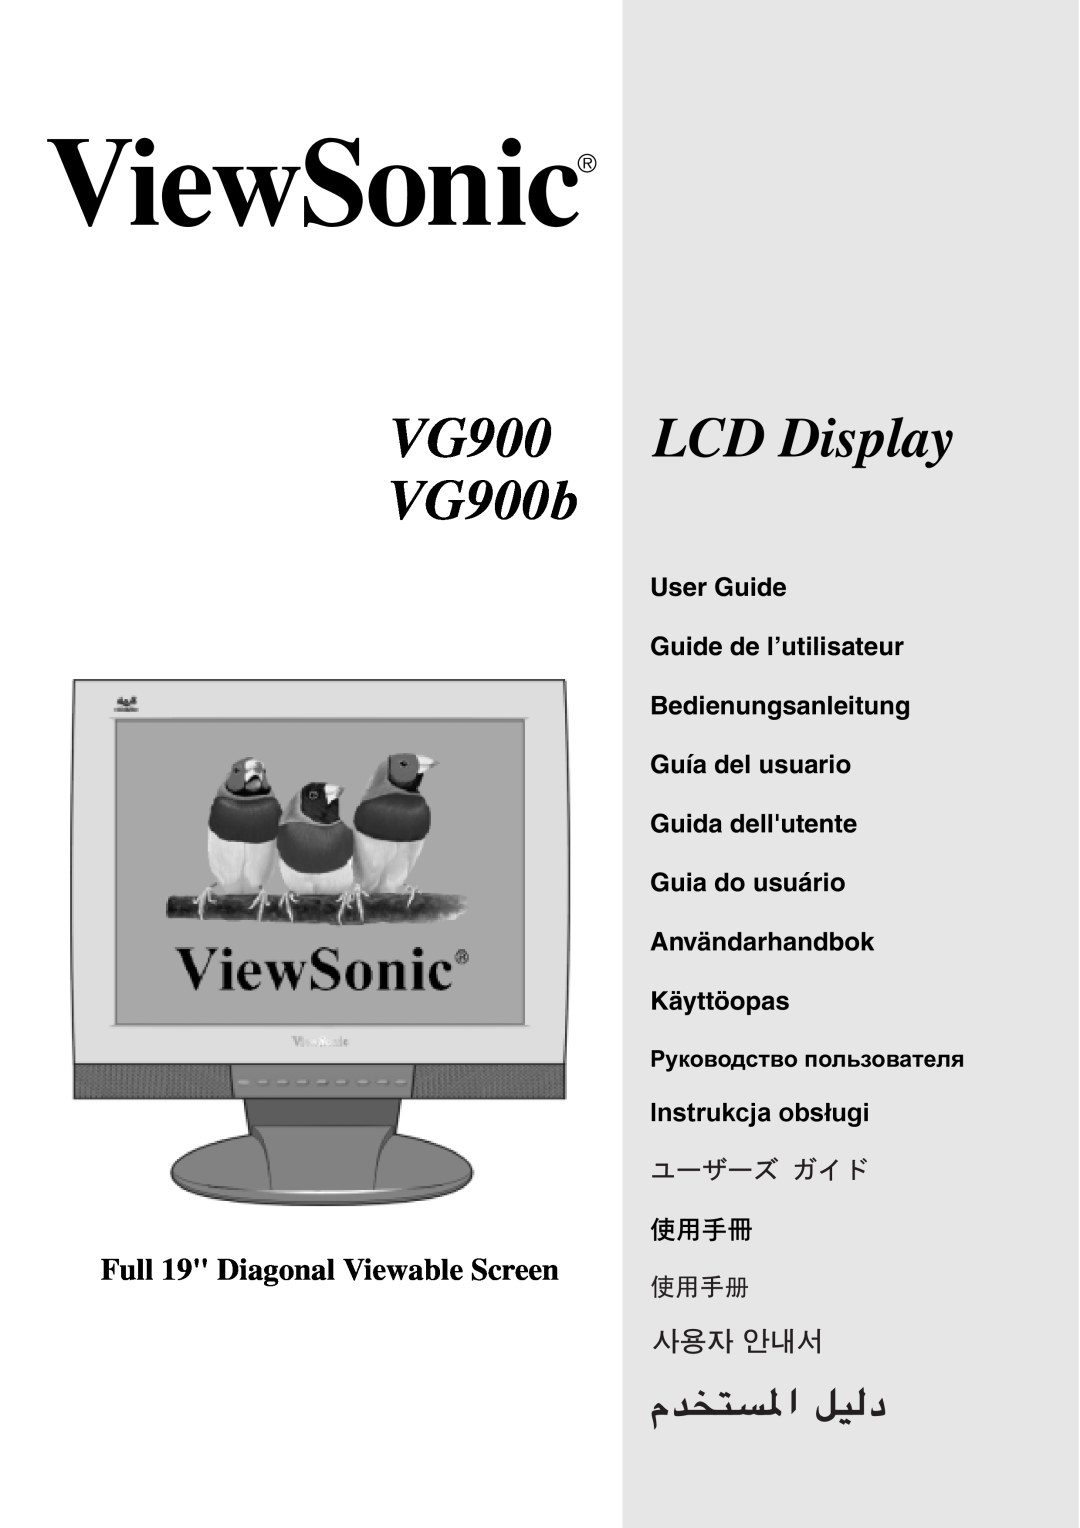 ViewSonic VG900 manual Full 19 Diagonal Viewable Screen, User Guide Guide de l’utilisateur Bedienungsanleitung, Käyttöopas 